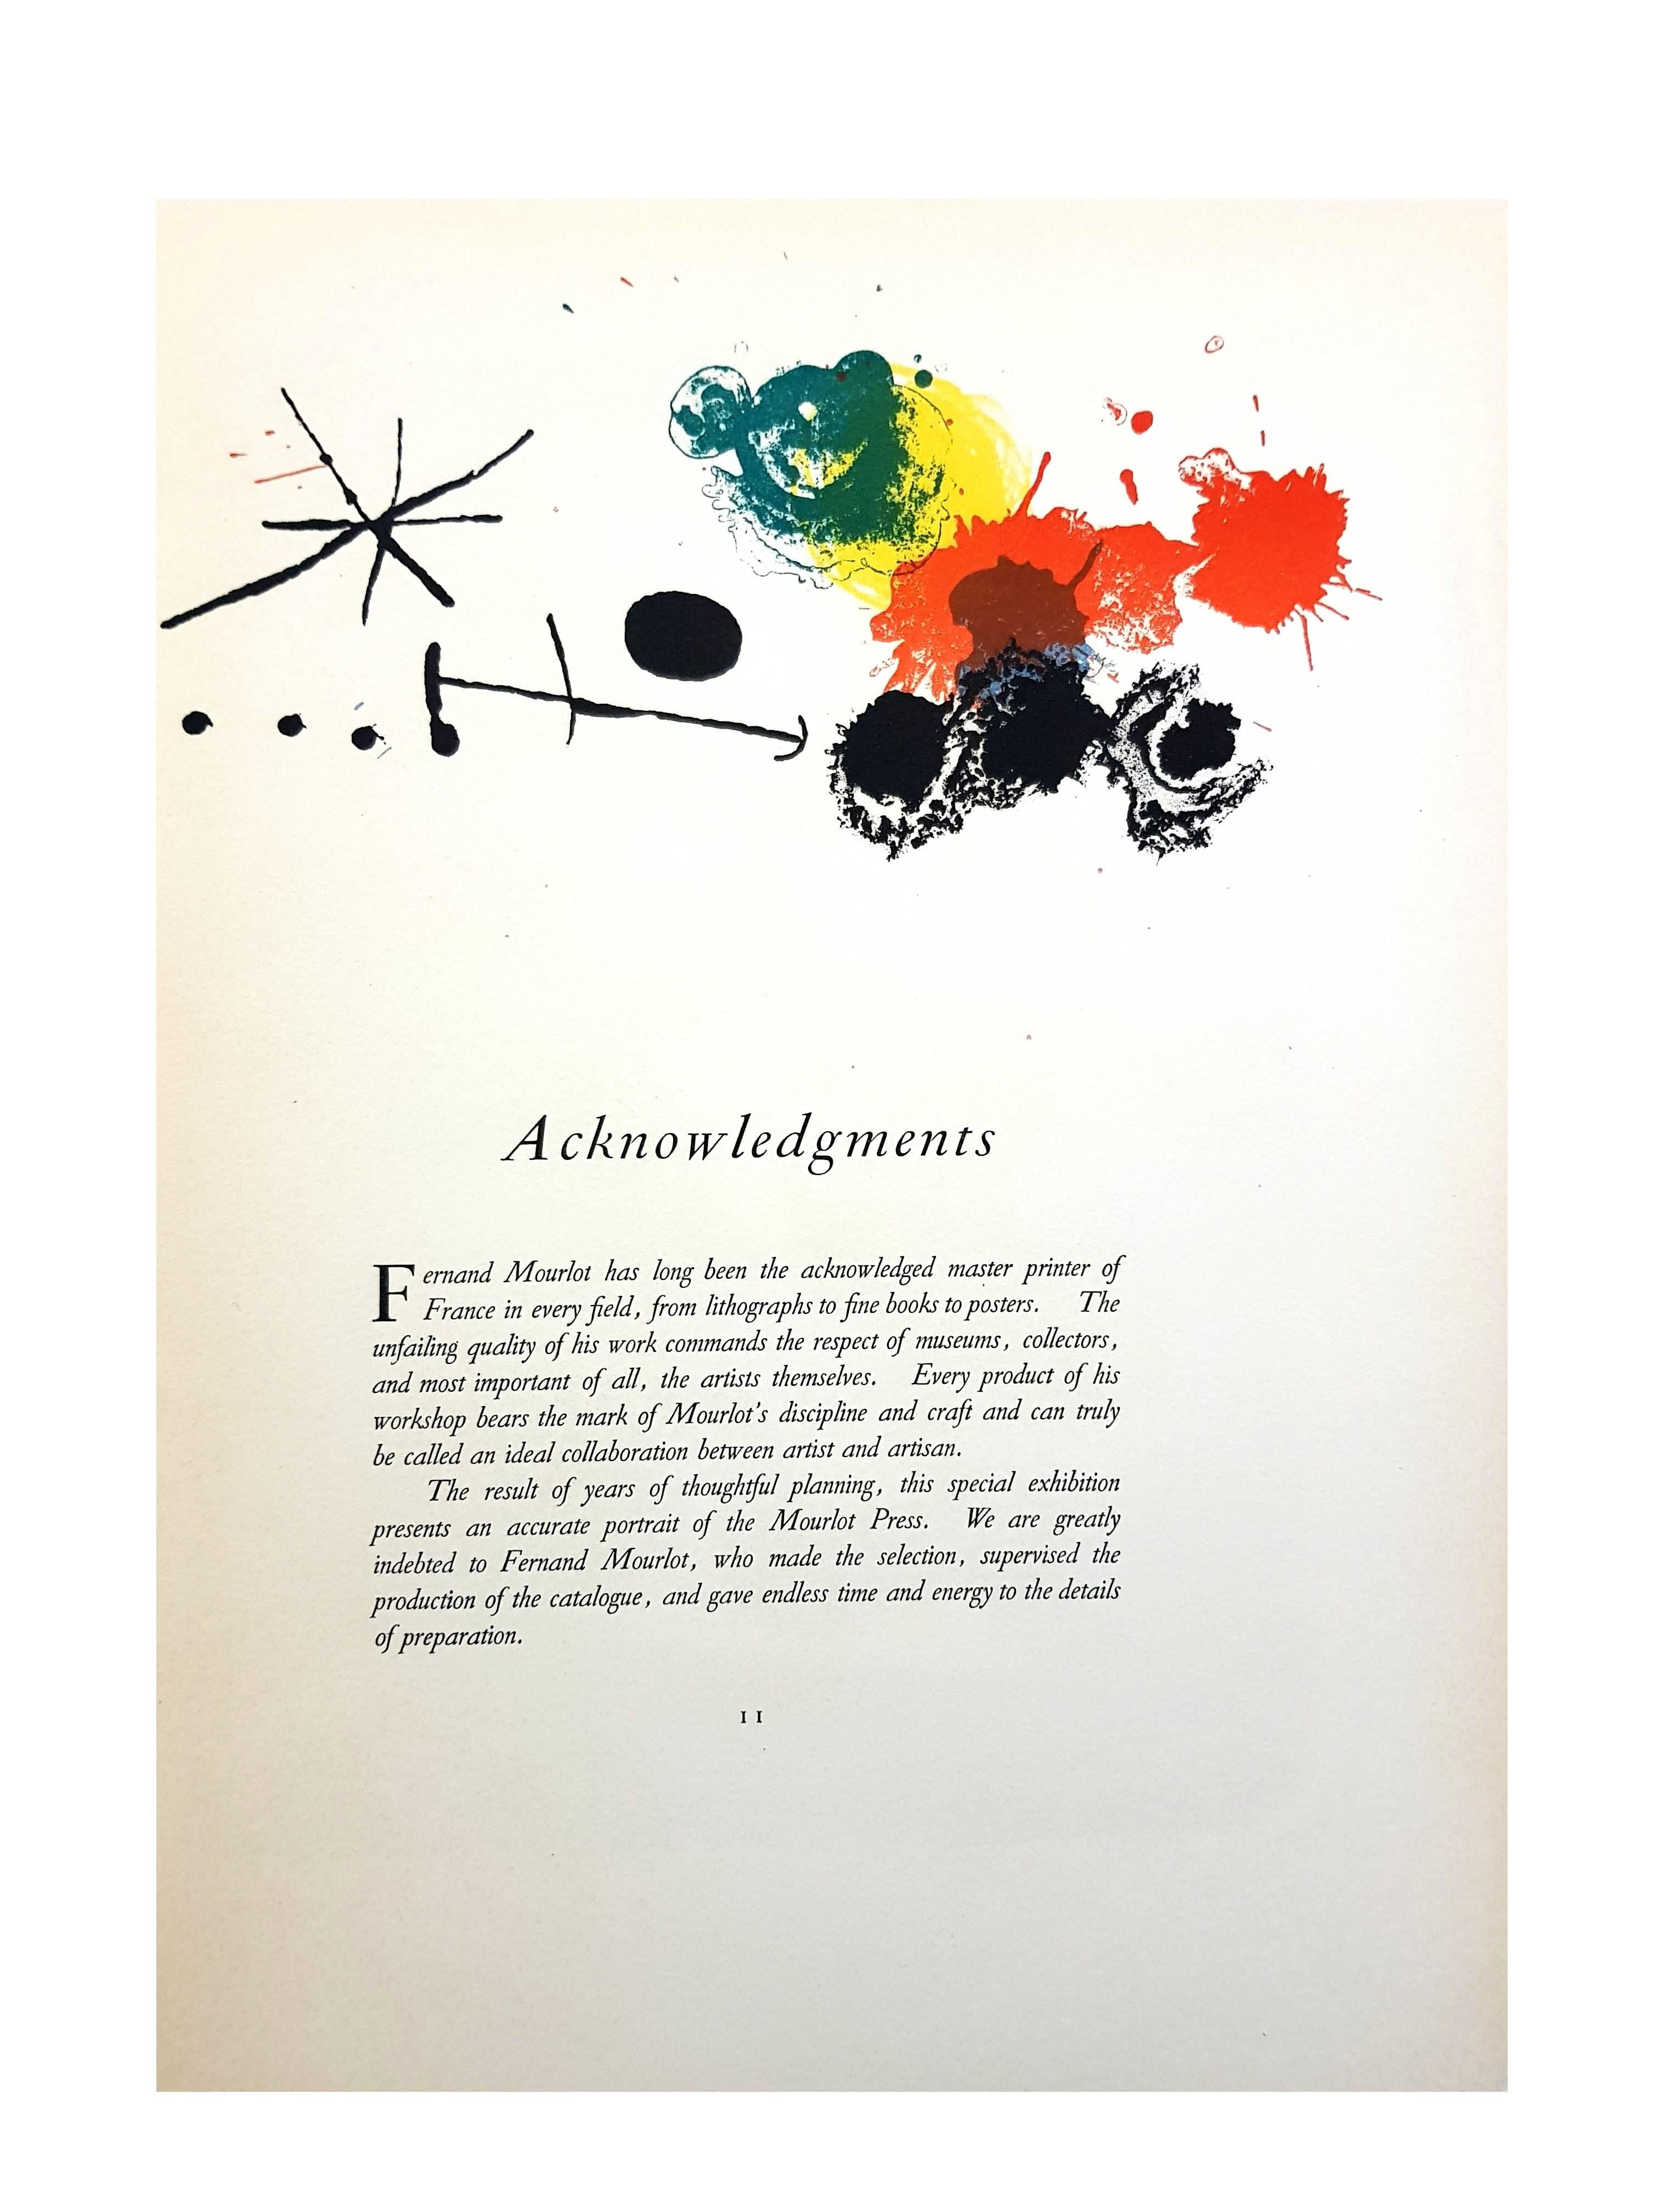 Joan Miro - Abstrakte Komposition - Original Lithographie 
1964
Abmessungen: 30 x 20 cm
Auflage von 200 (eines der 200 Exemplare auf Vélin de Rives)
Mourlot Press, 1964

Biografie

Joan Miró i Ferrà  (20. April 1893 - 25. Dezember 1983) war ein